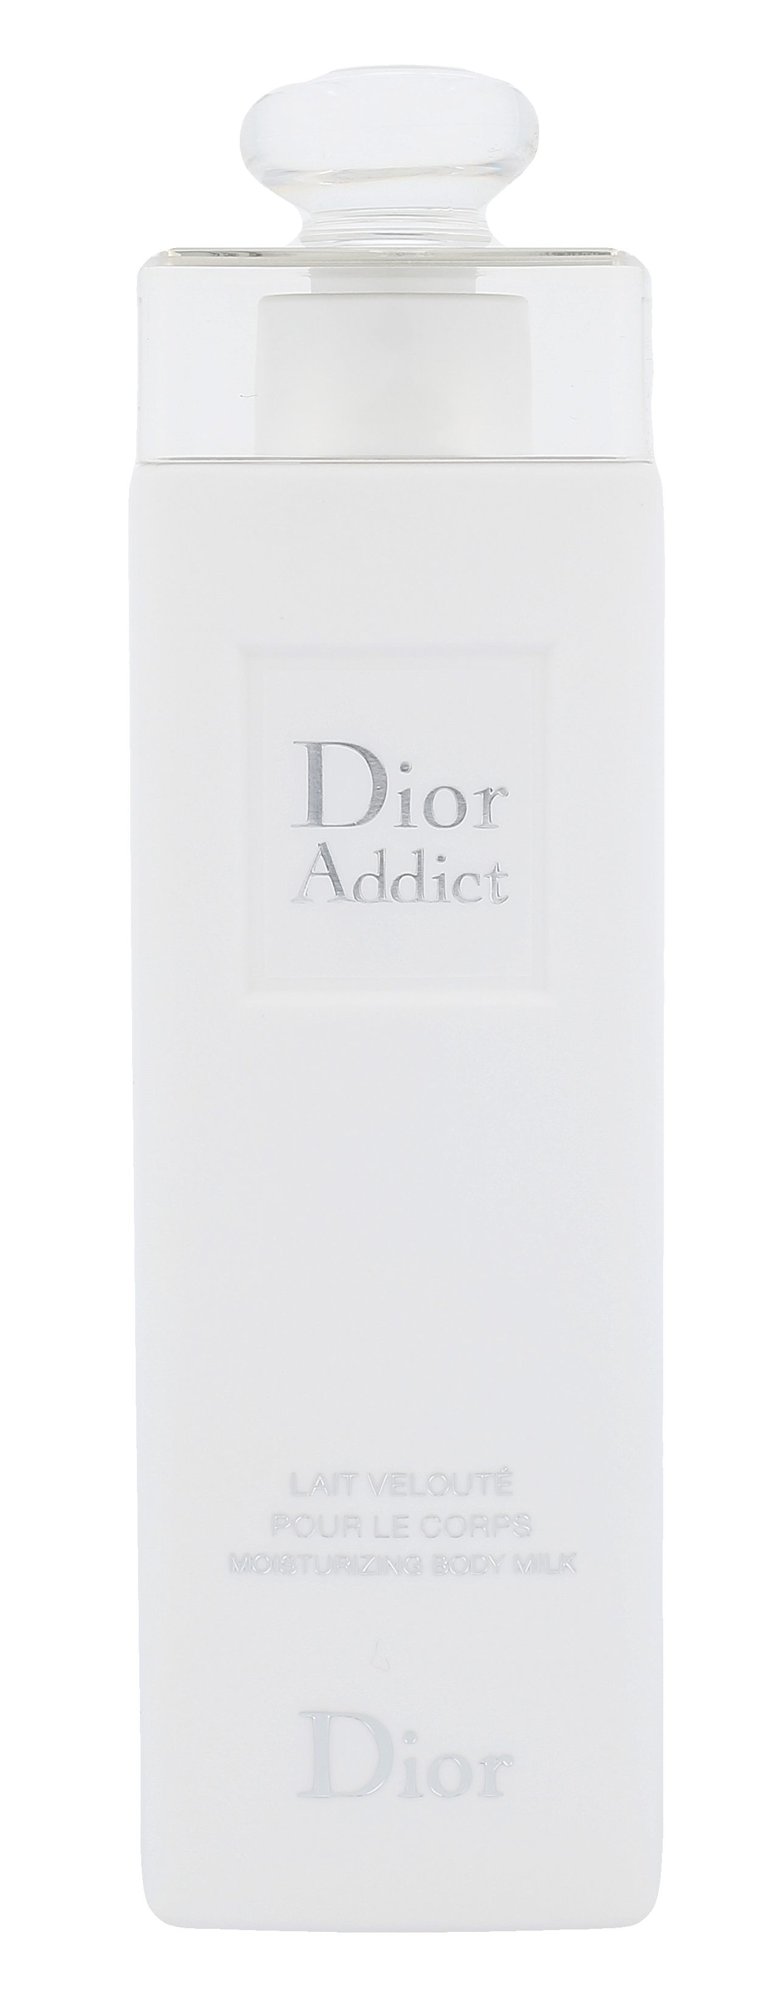 Christian Dior Addict kūno losjonas